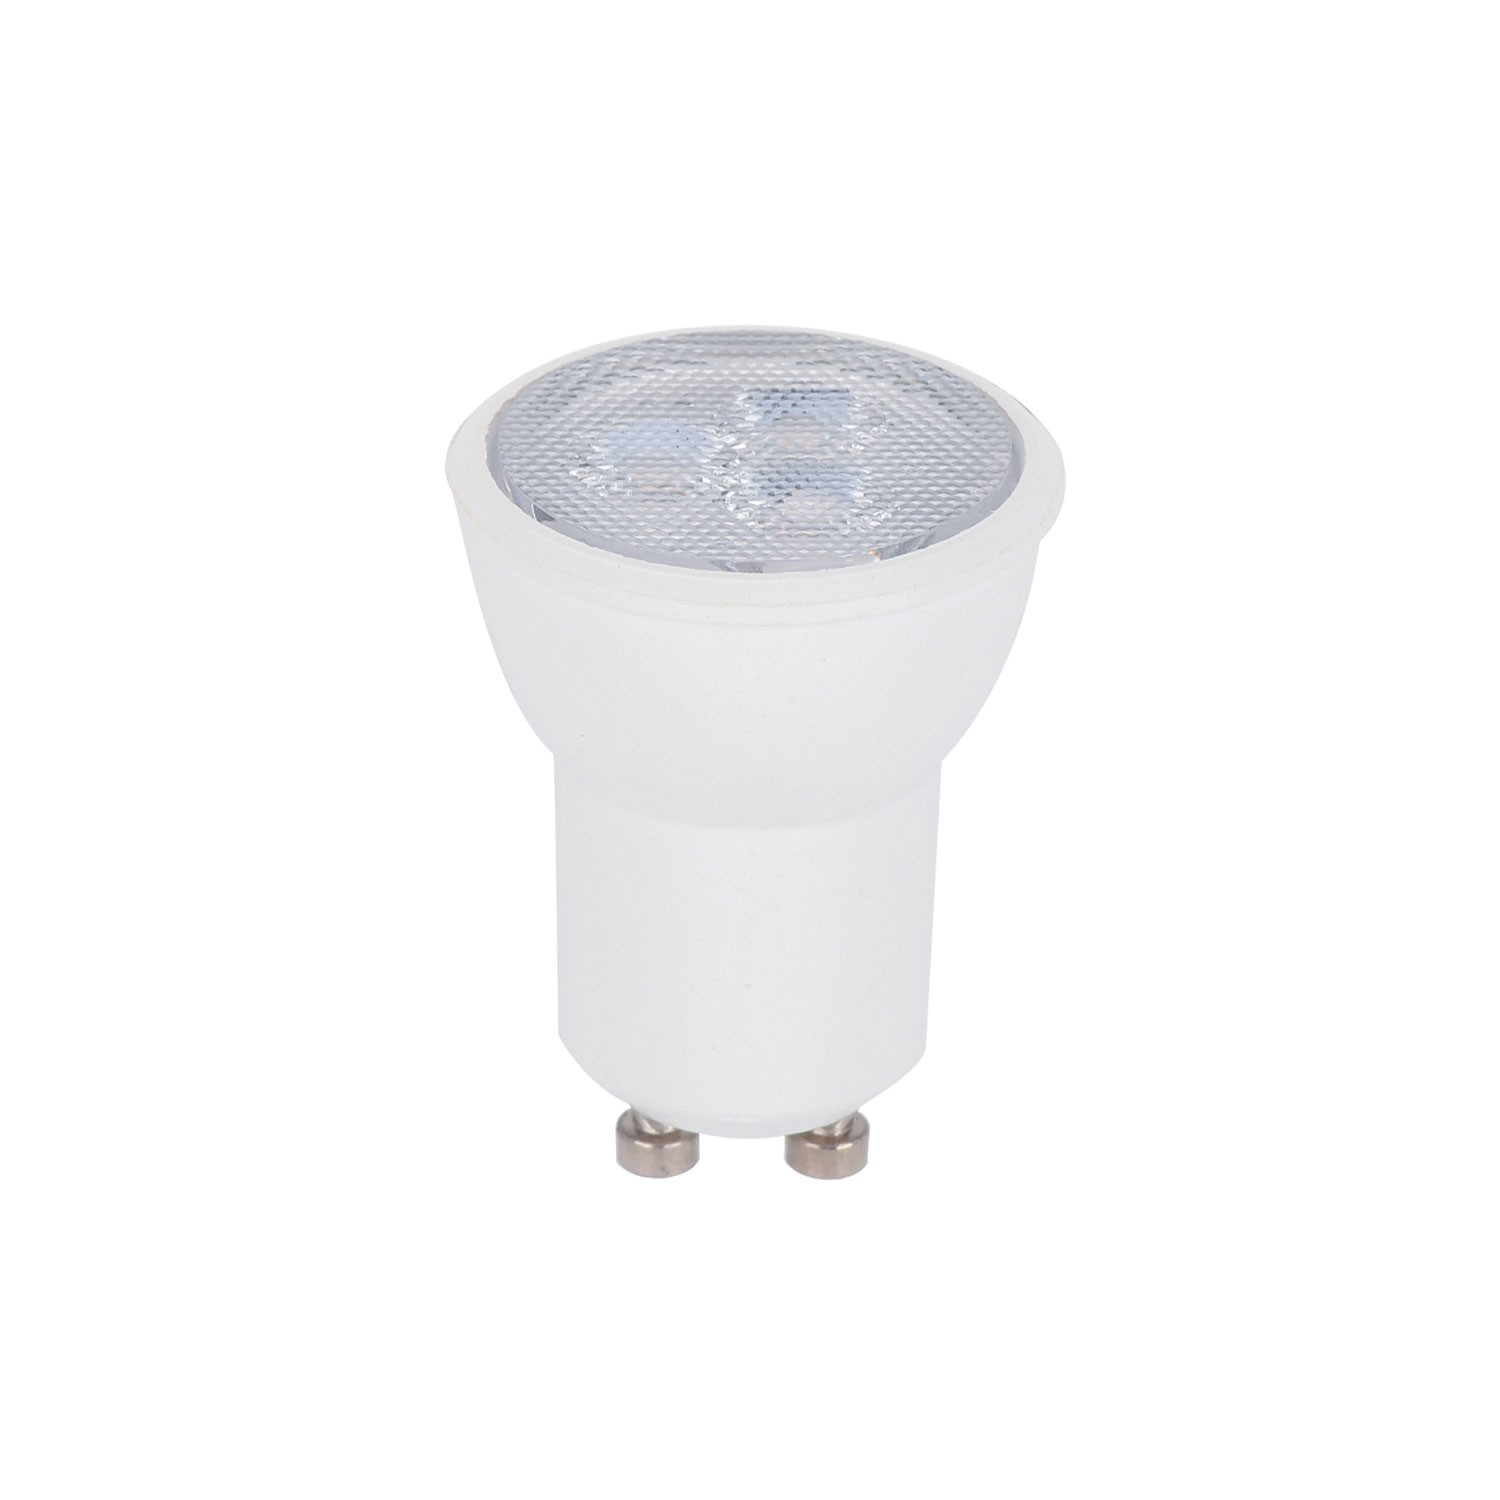 Spostaluce Lamp adjustable Flex 30 with GU1d0 spotlight and UK plug